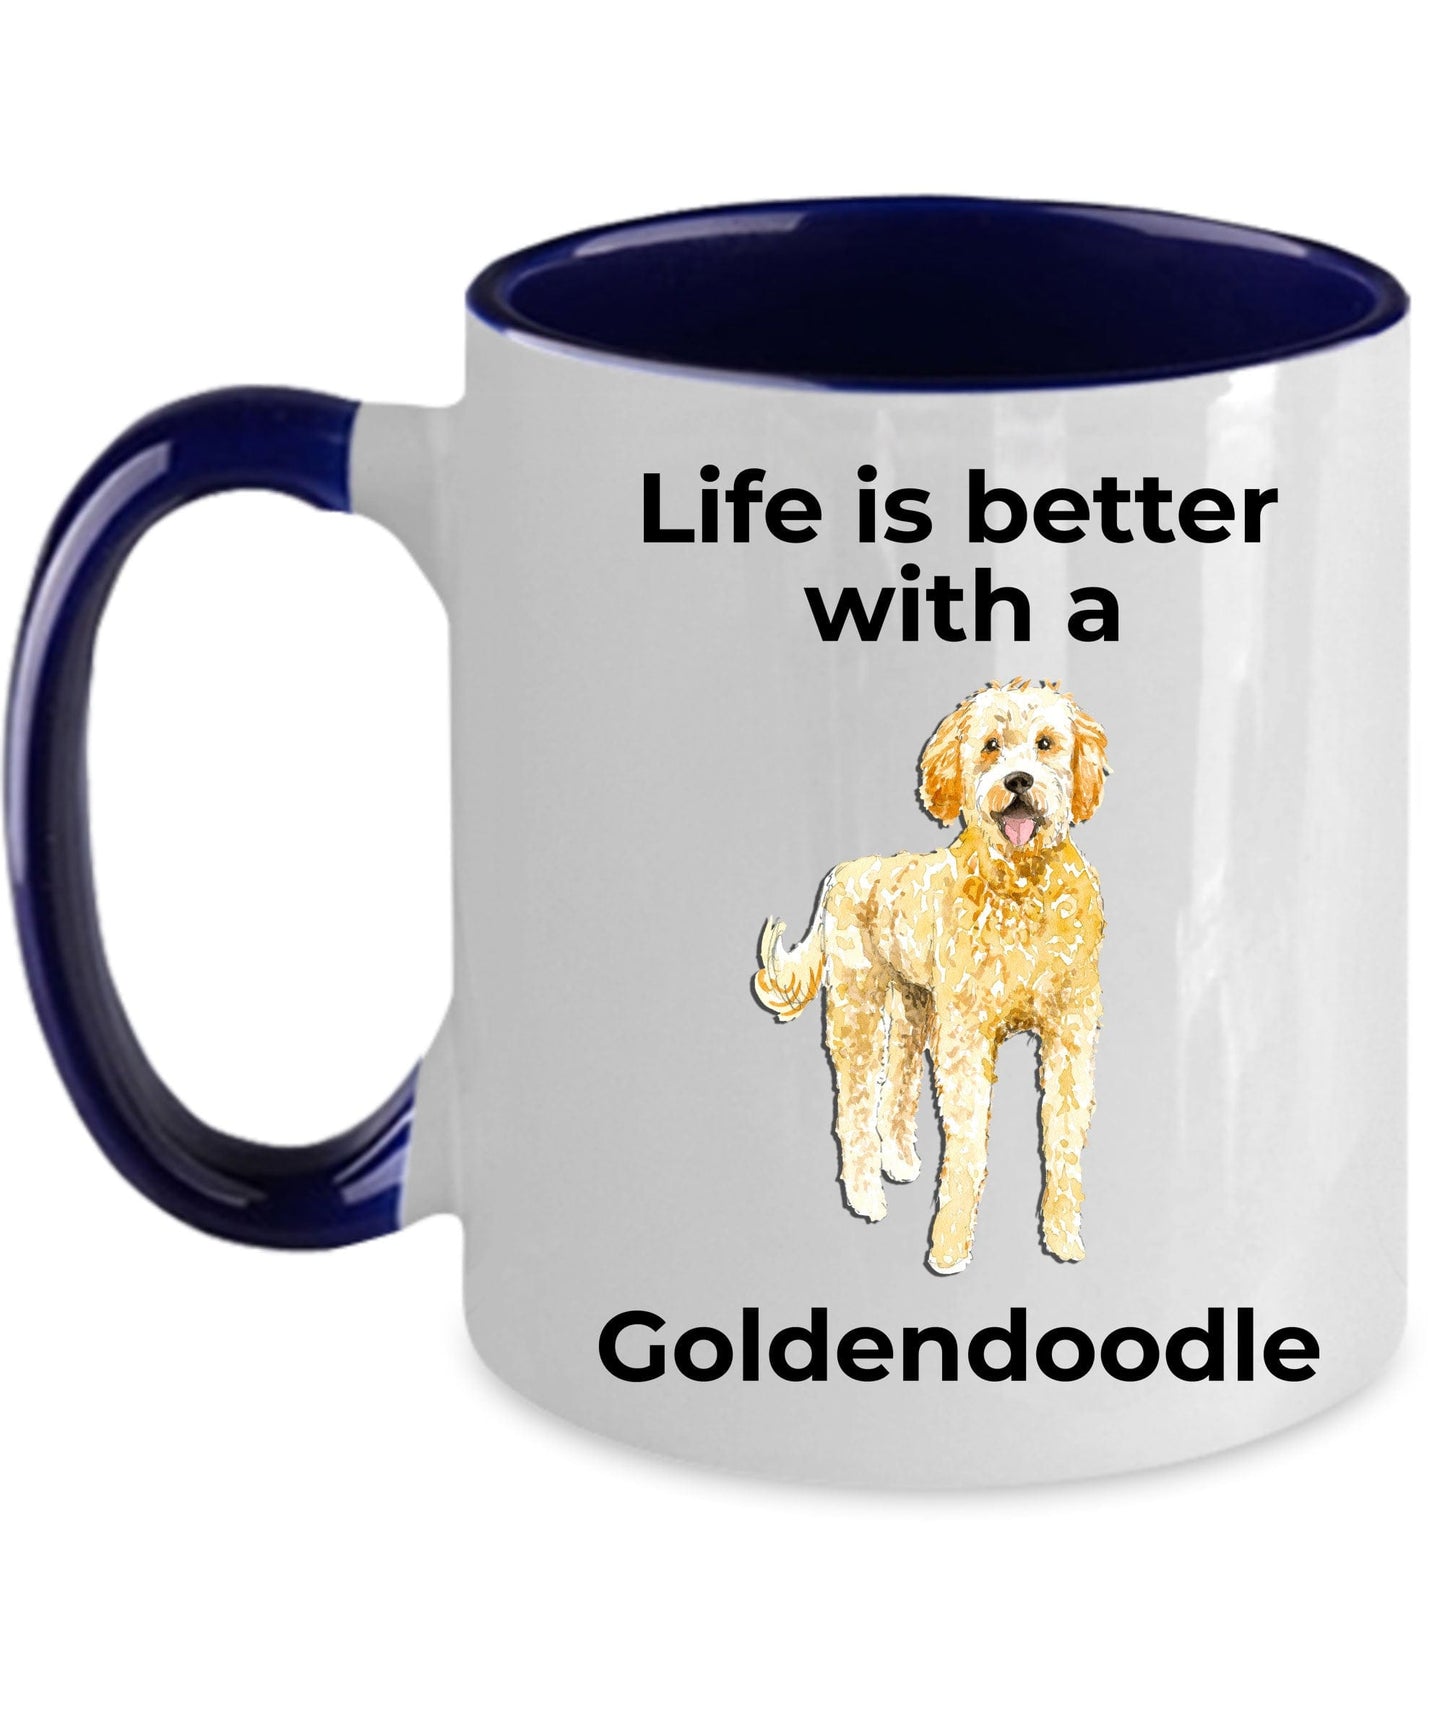 Goldendoodle Dog Coffee Mug - Life is Better